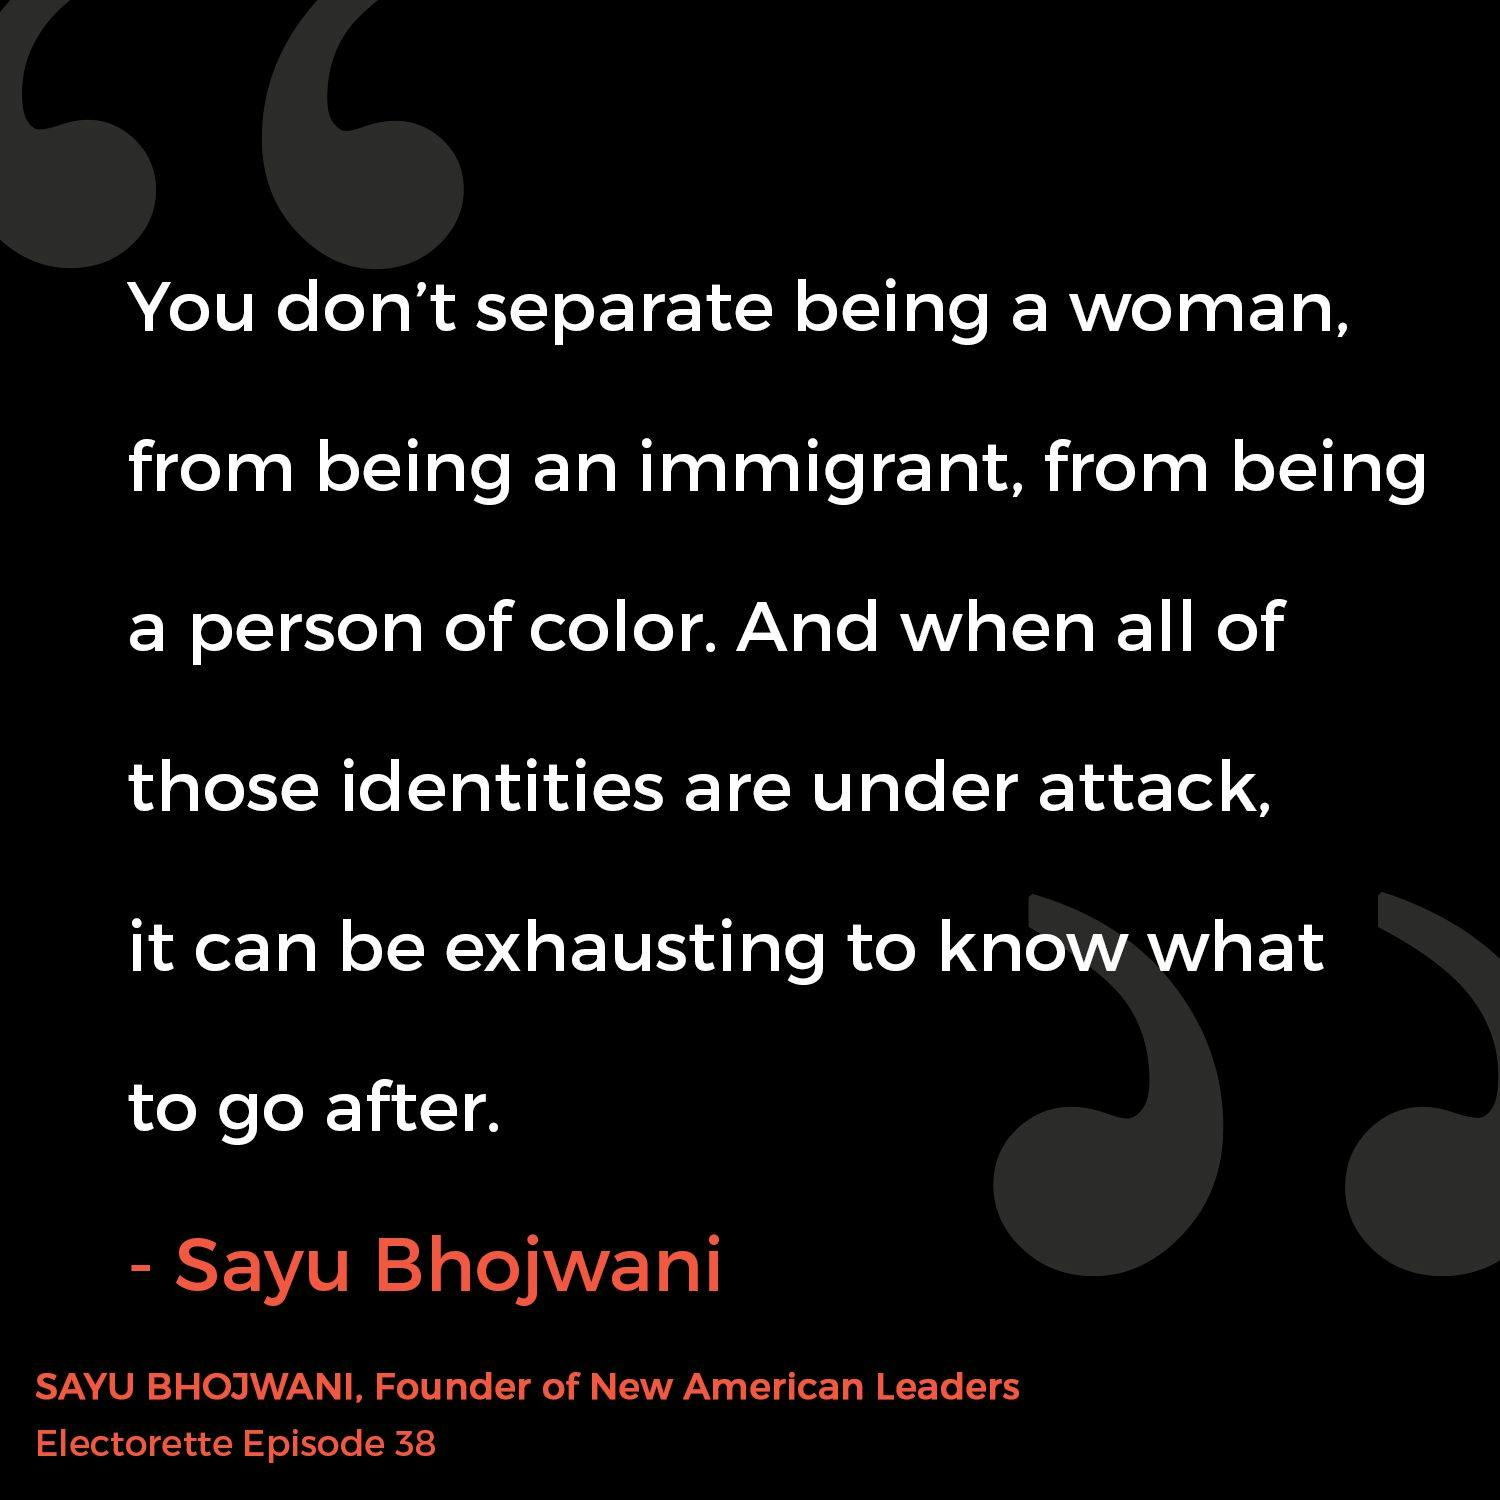 Sayu Bhojwani, Founder of New American Leaders